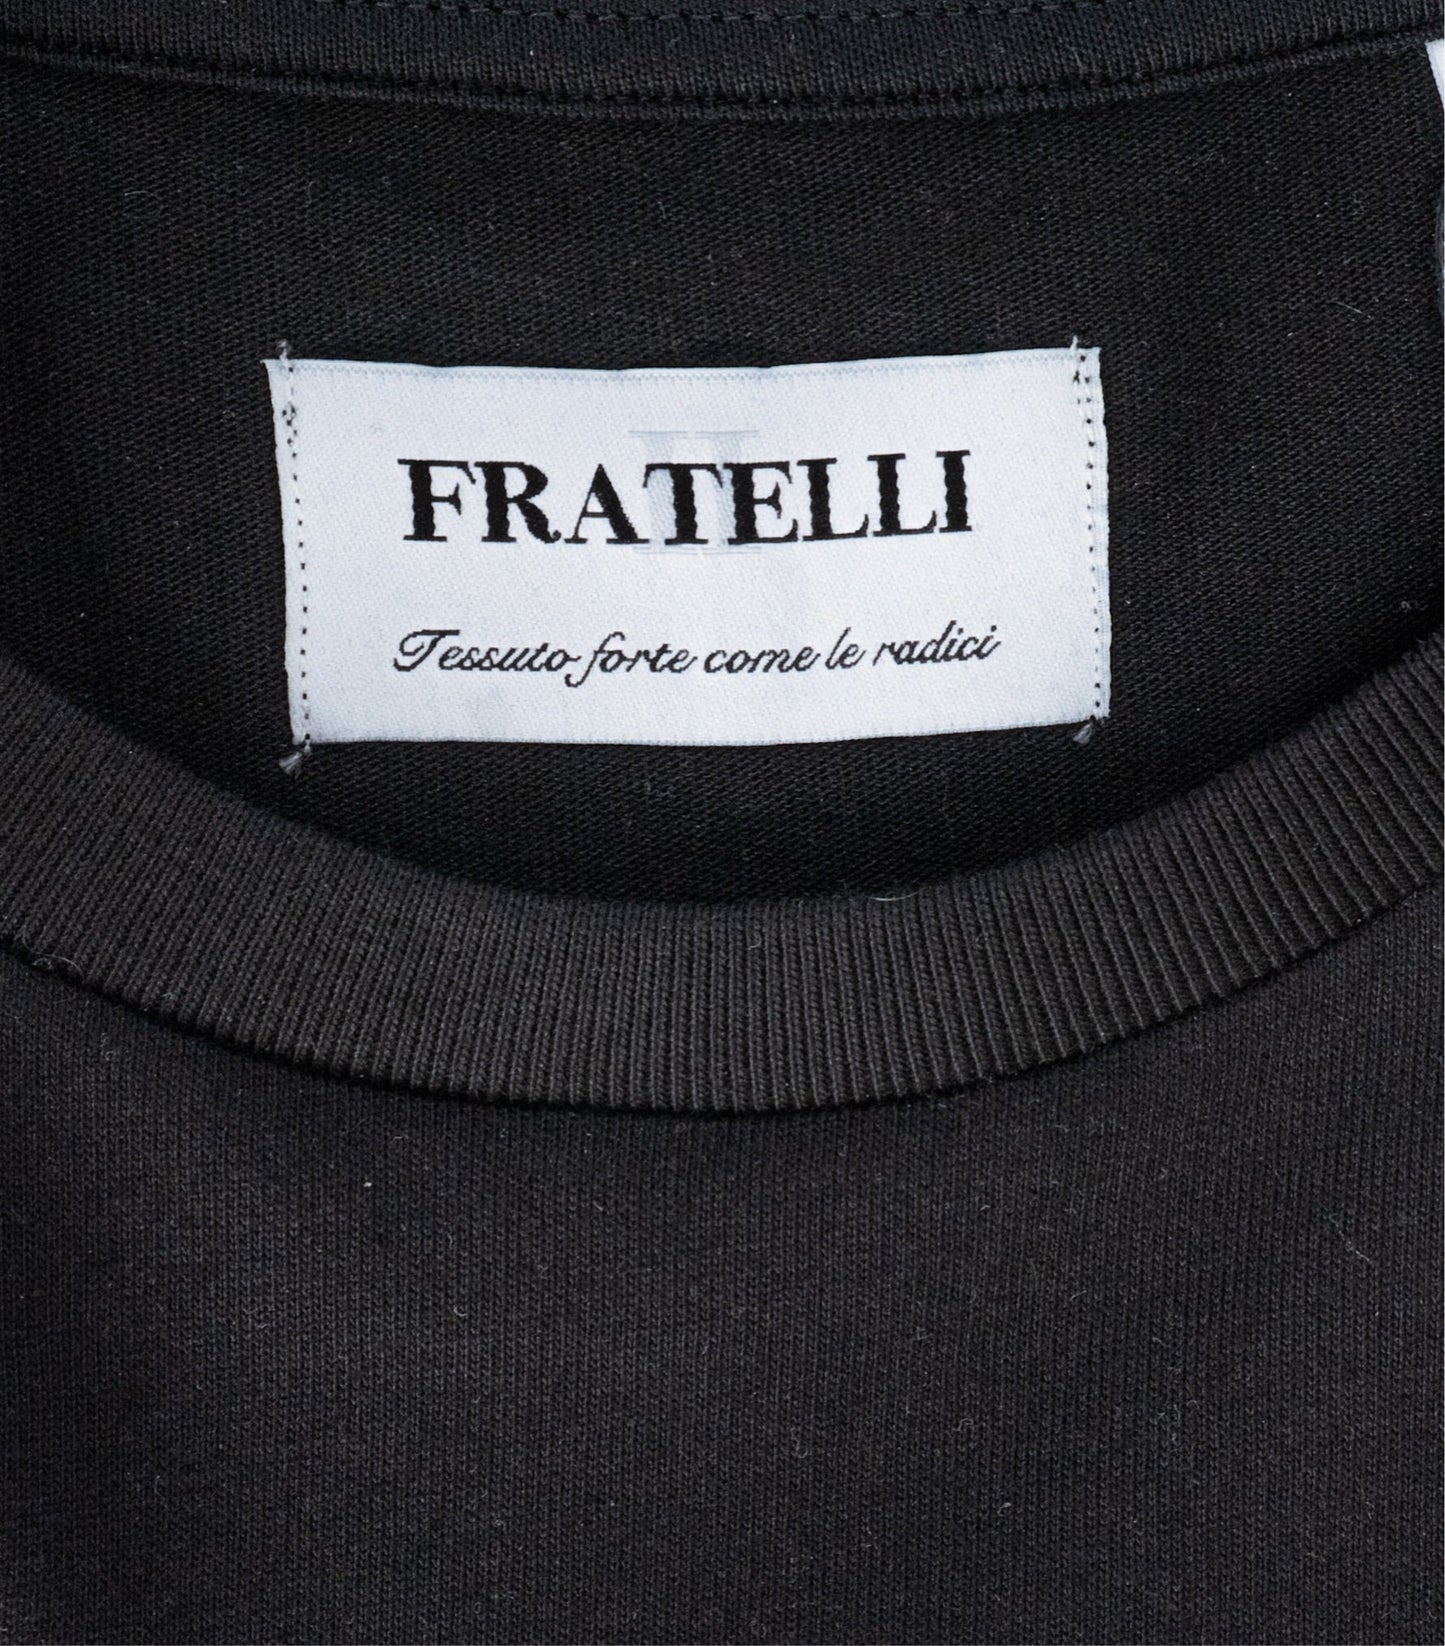 2FRATELLI Oversized T-Shirt schwarz women (unisex) - 2FRATELLI